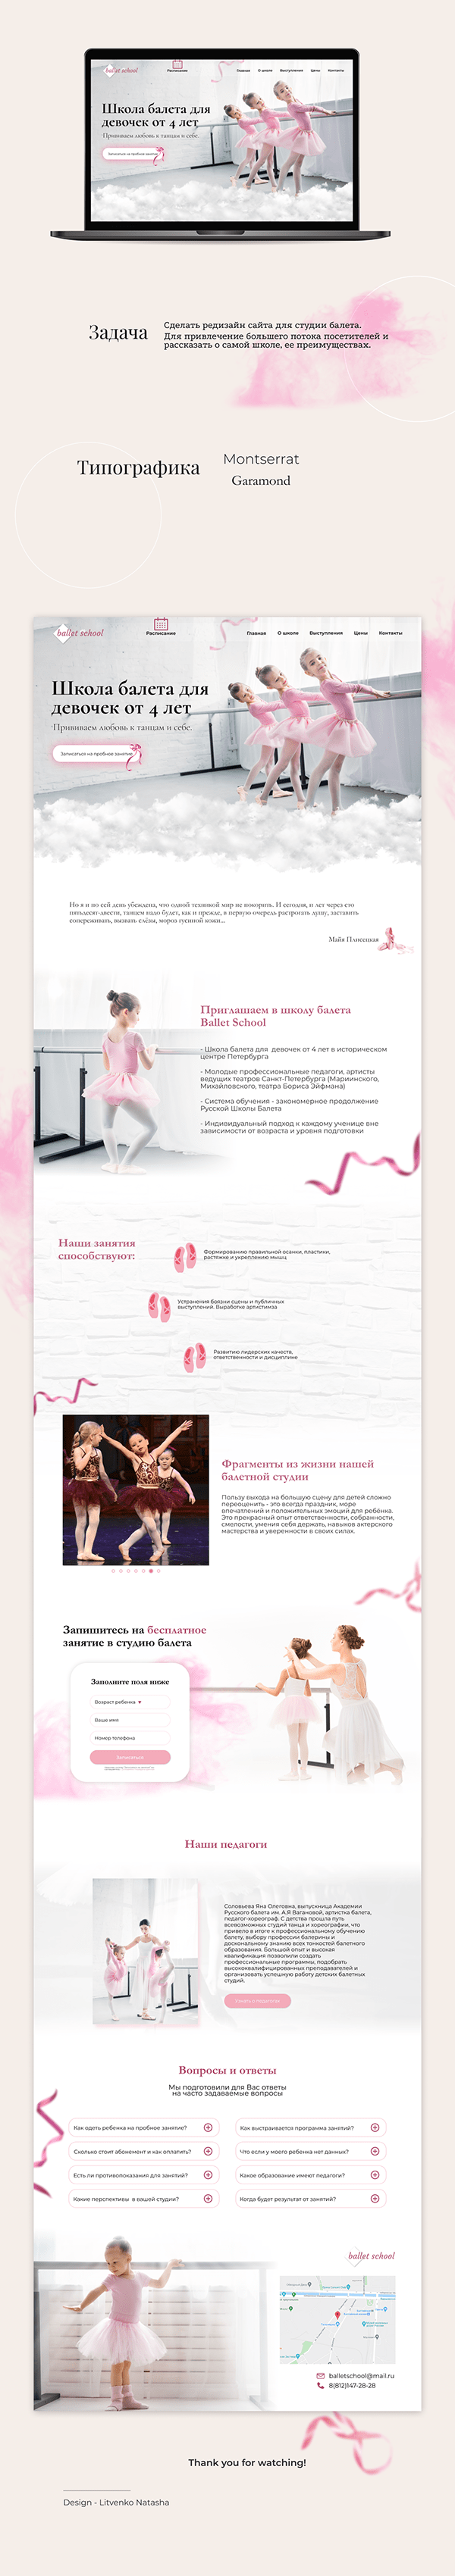 landing page design ballet school for girls